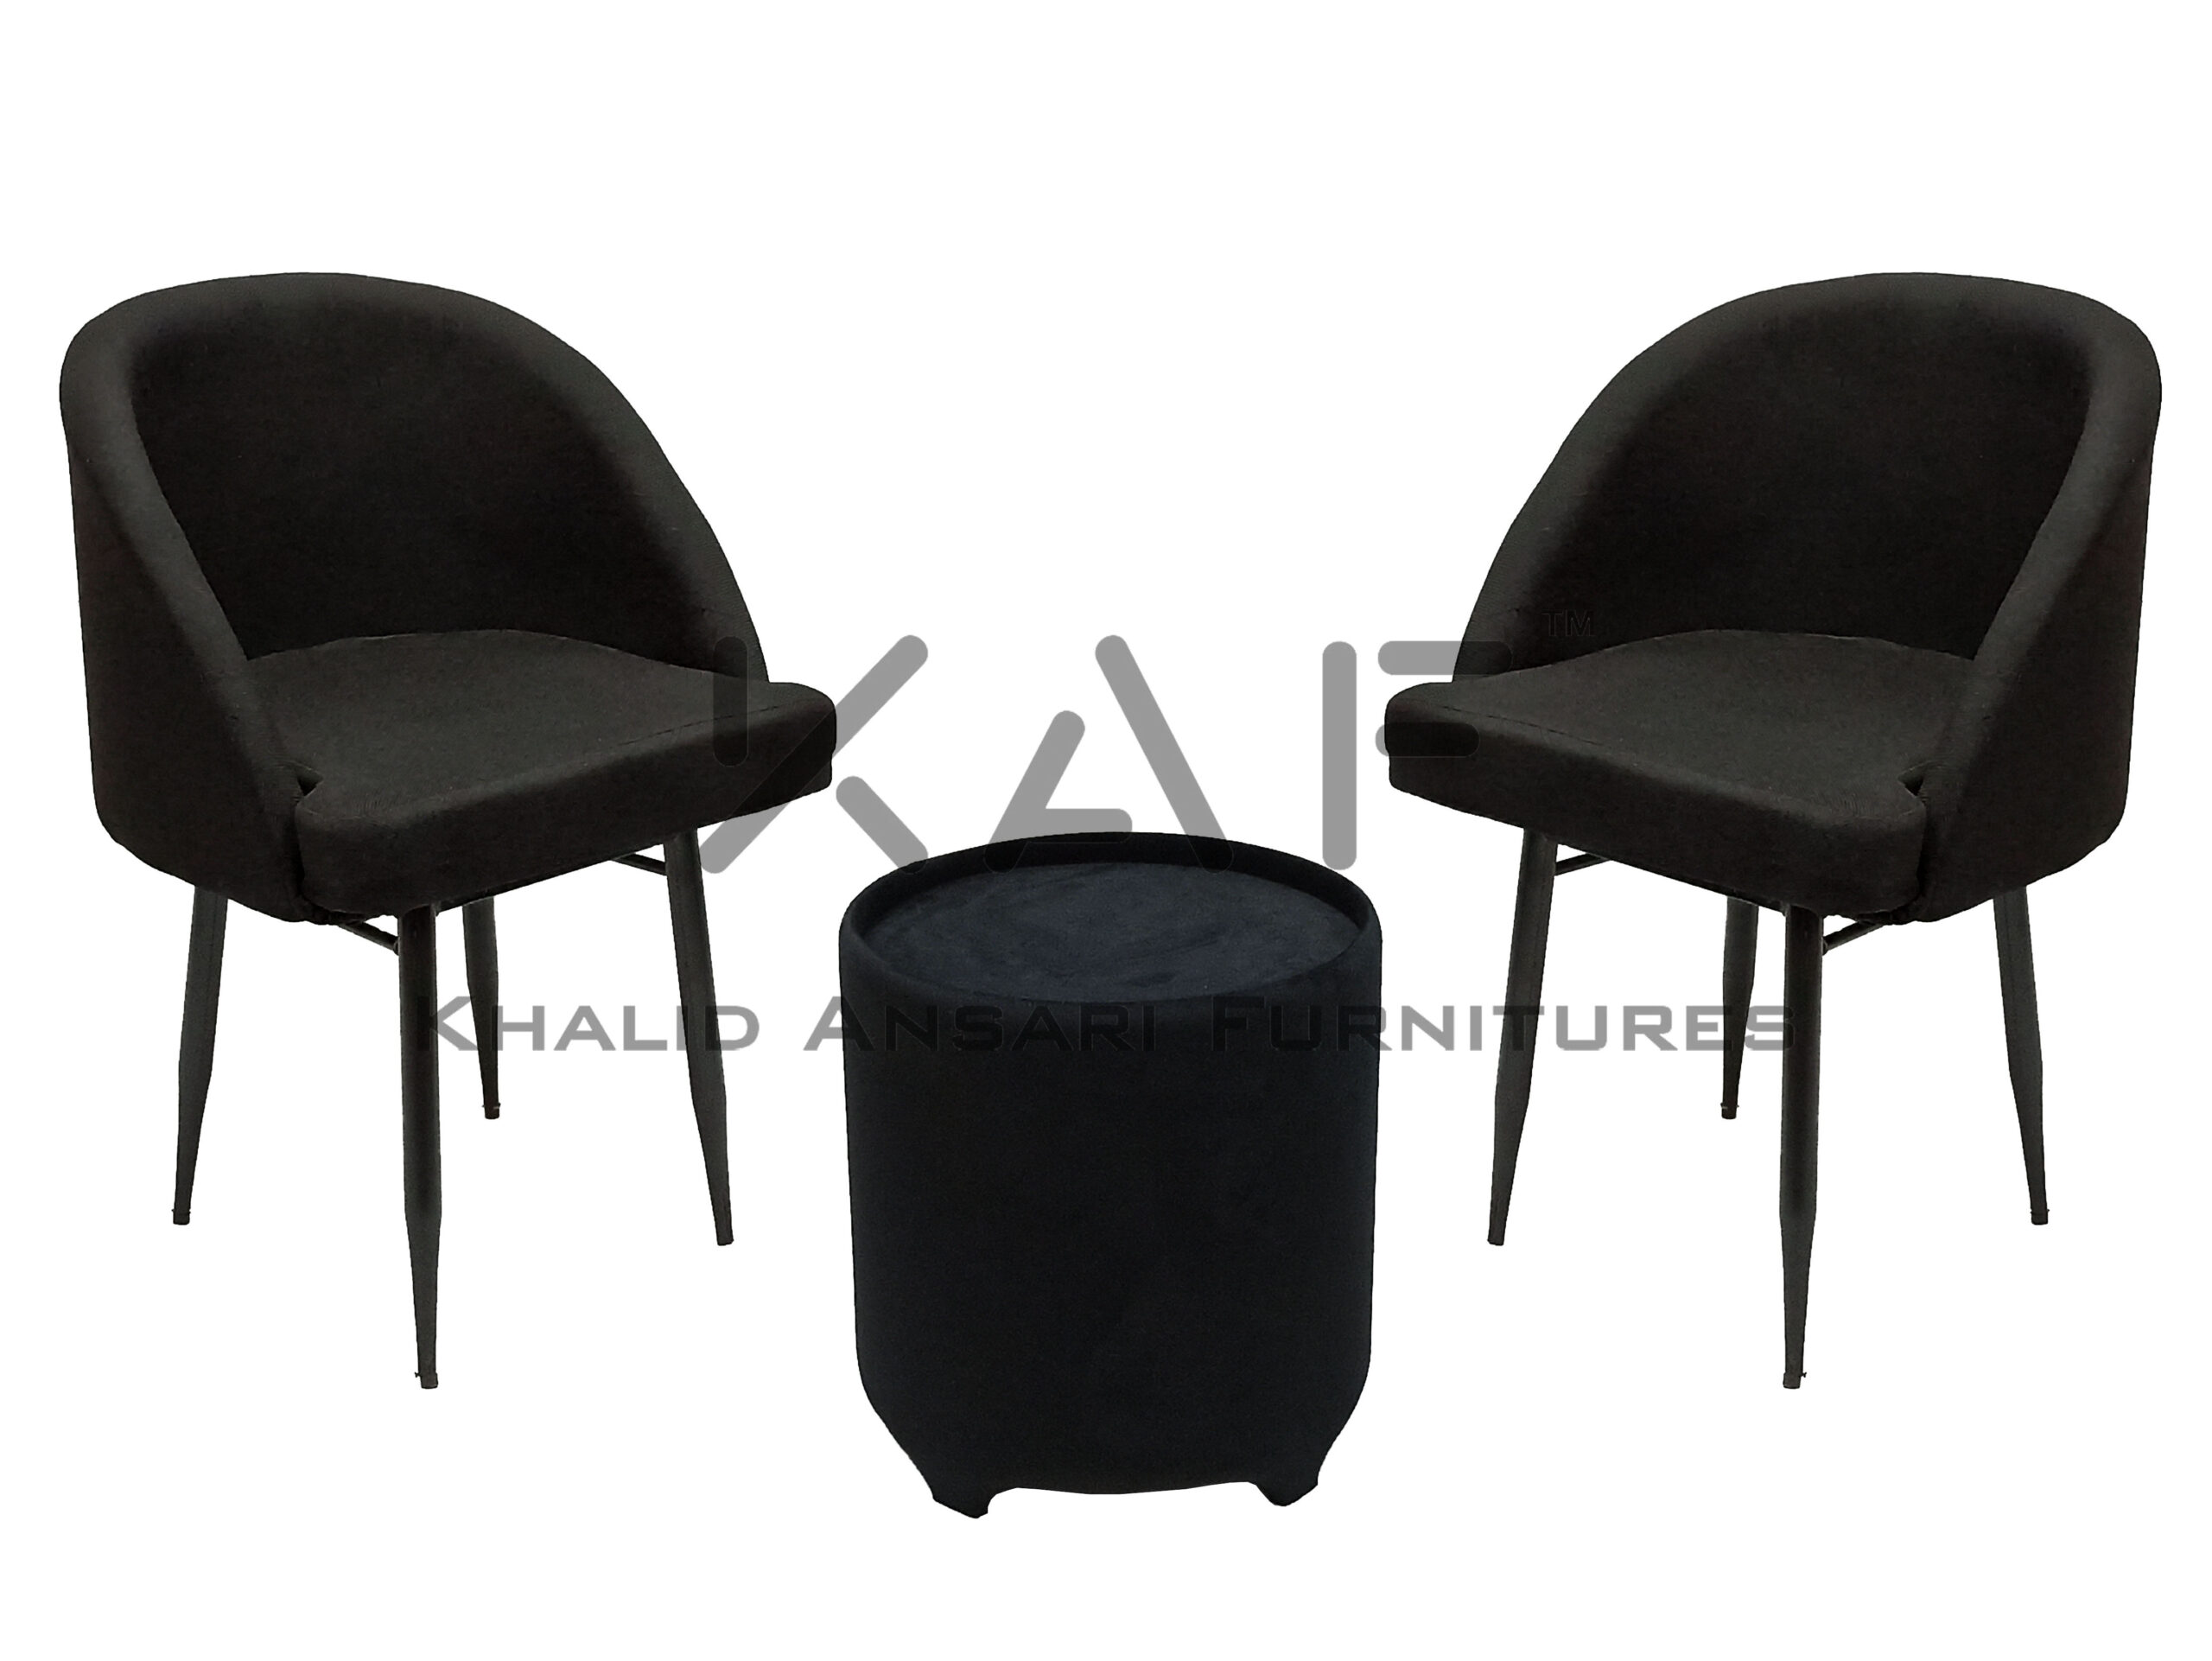 Bed Room Premium Chair Slope Arm Design Black Jute Fabric set with Black Velvet Tea Table - 2 Chairs + 1 Table